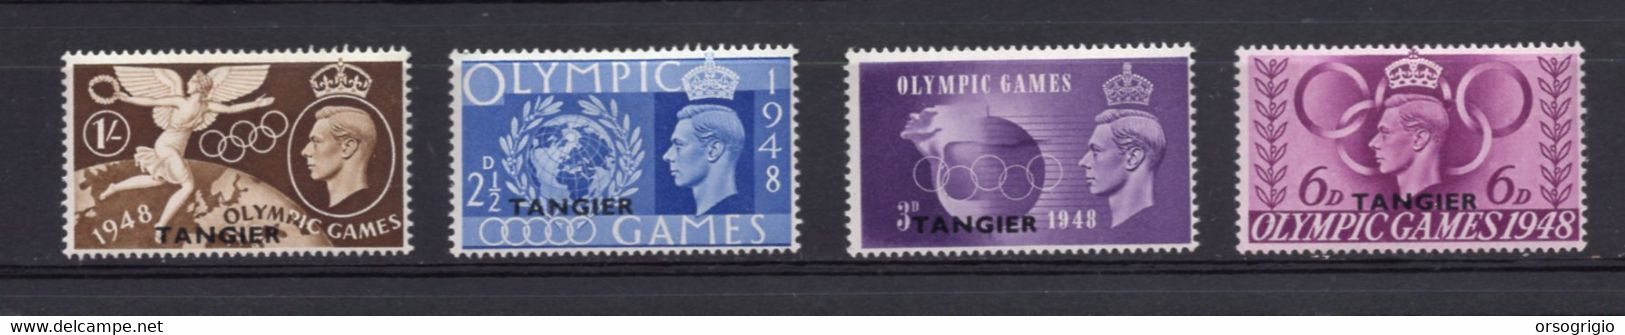 GRAN BRETAGNA - OLYMPIC GAMES - TANGIER - Zomer 1948: Londen